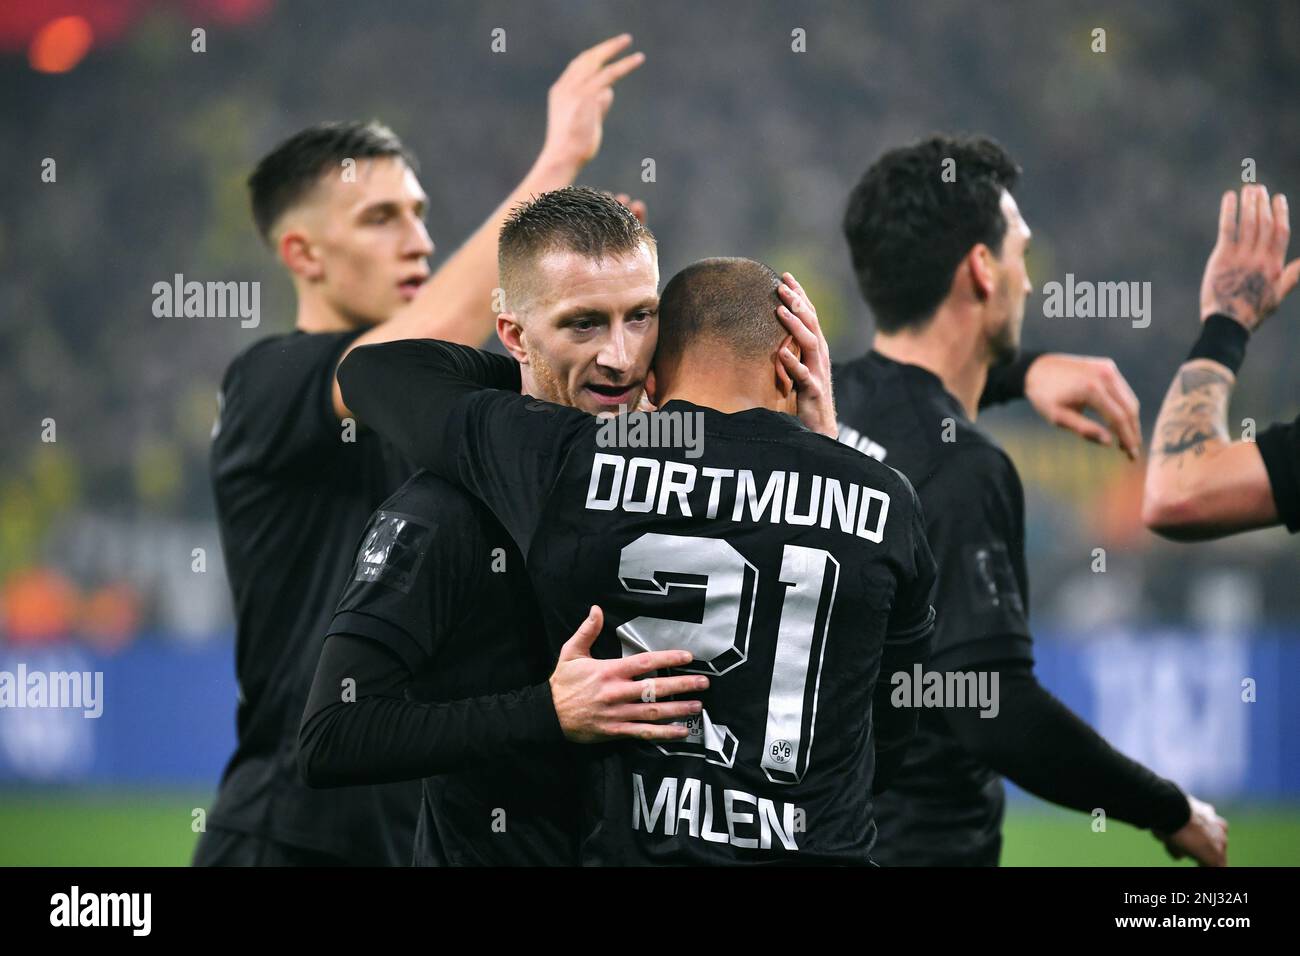 Bundesliga, signal Iduna Park Dortmund: Borussia Dortmund vs Hertha BSC Berlin; Donyell Malen (BVB) célèbre après avoir marqué avec Marco Reus (BVB) Banque D'Images